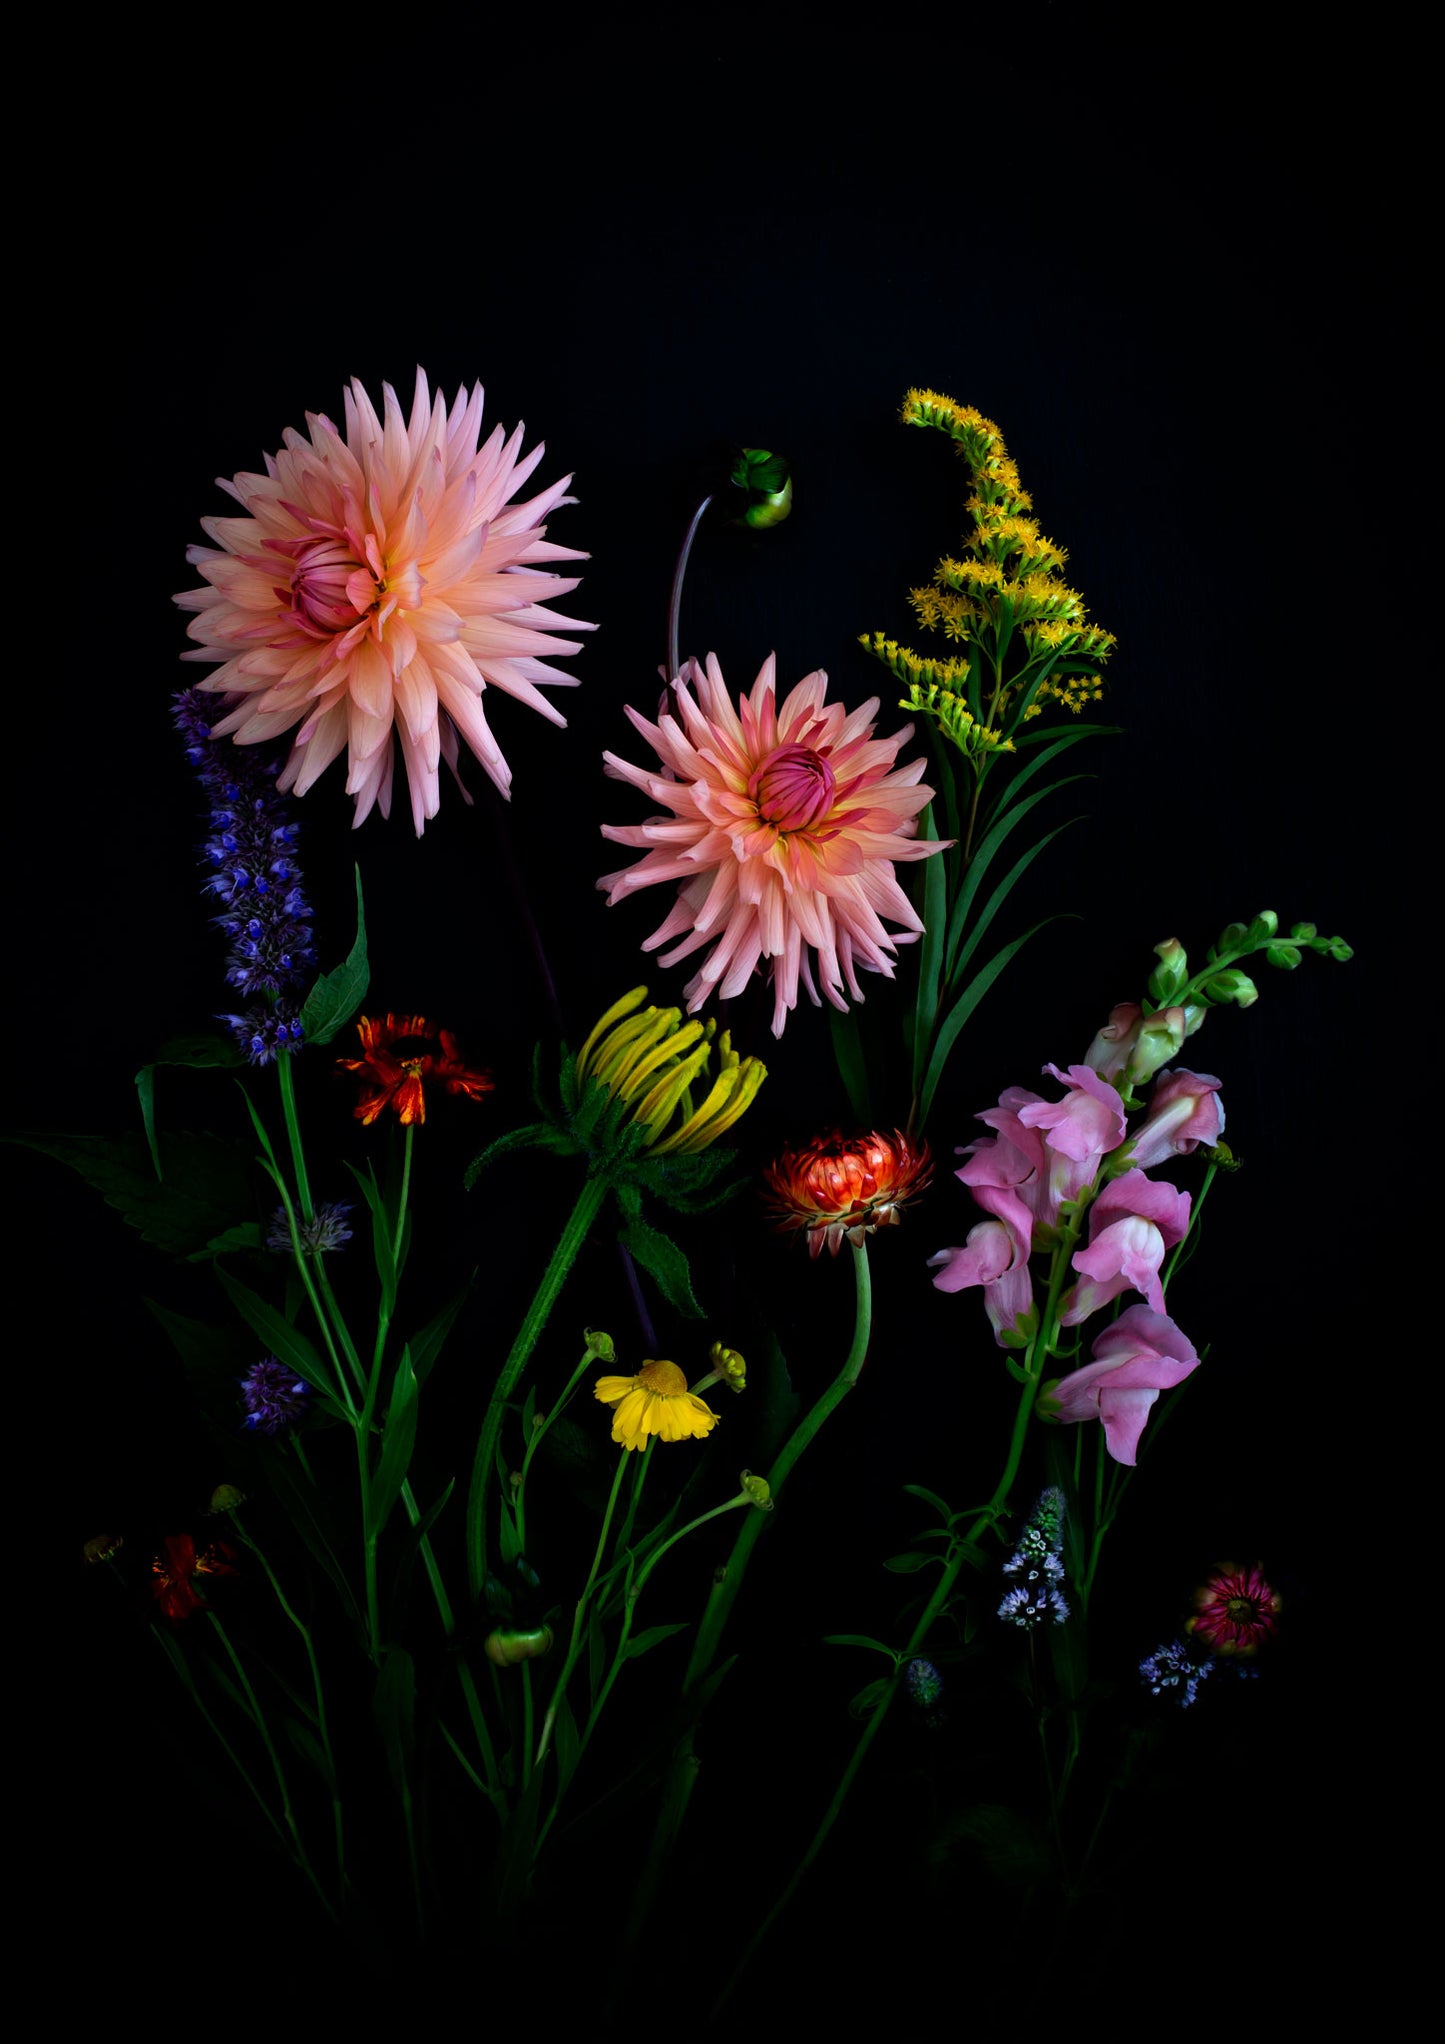 Botanical print of summer flowers, including Dahlias on a dark background